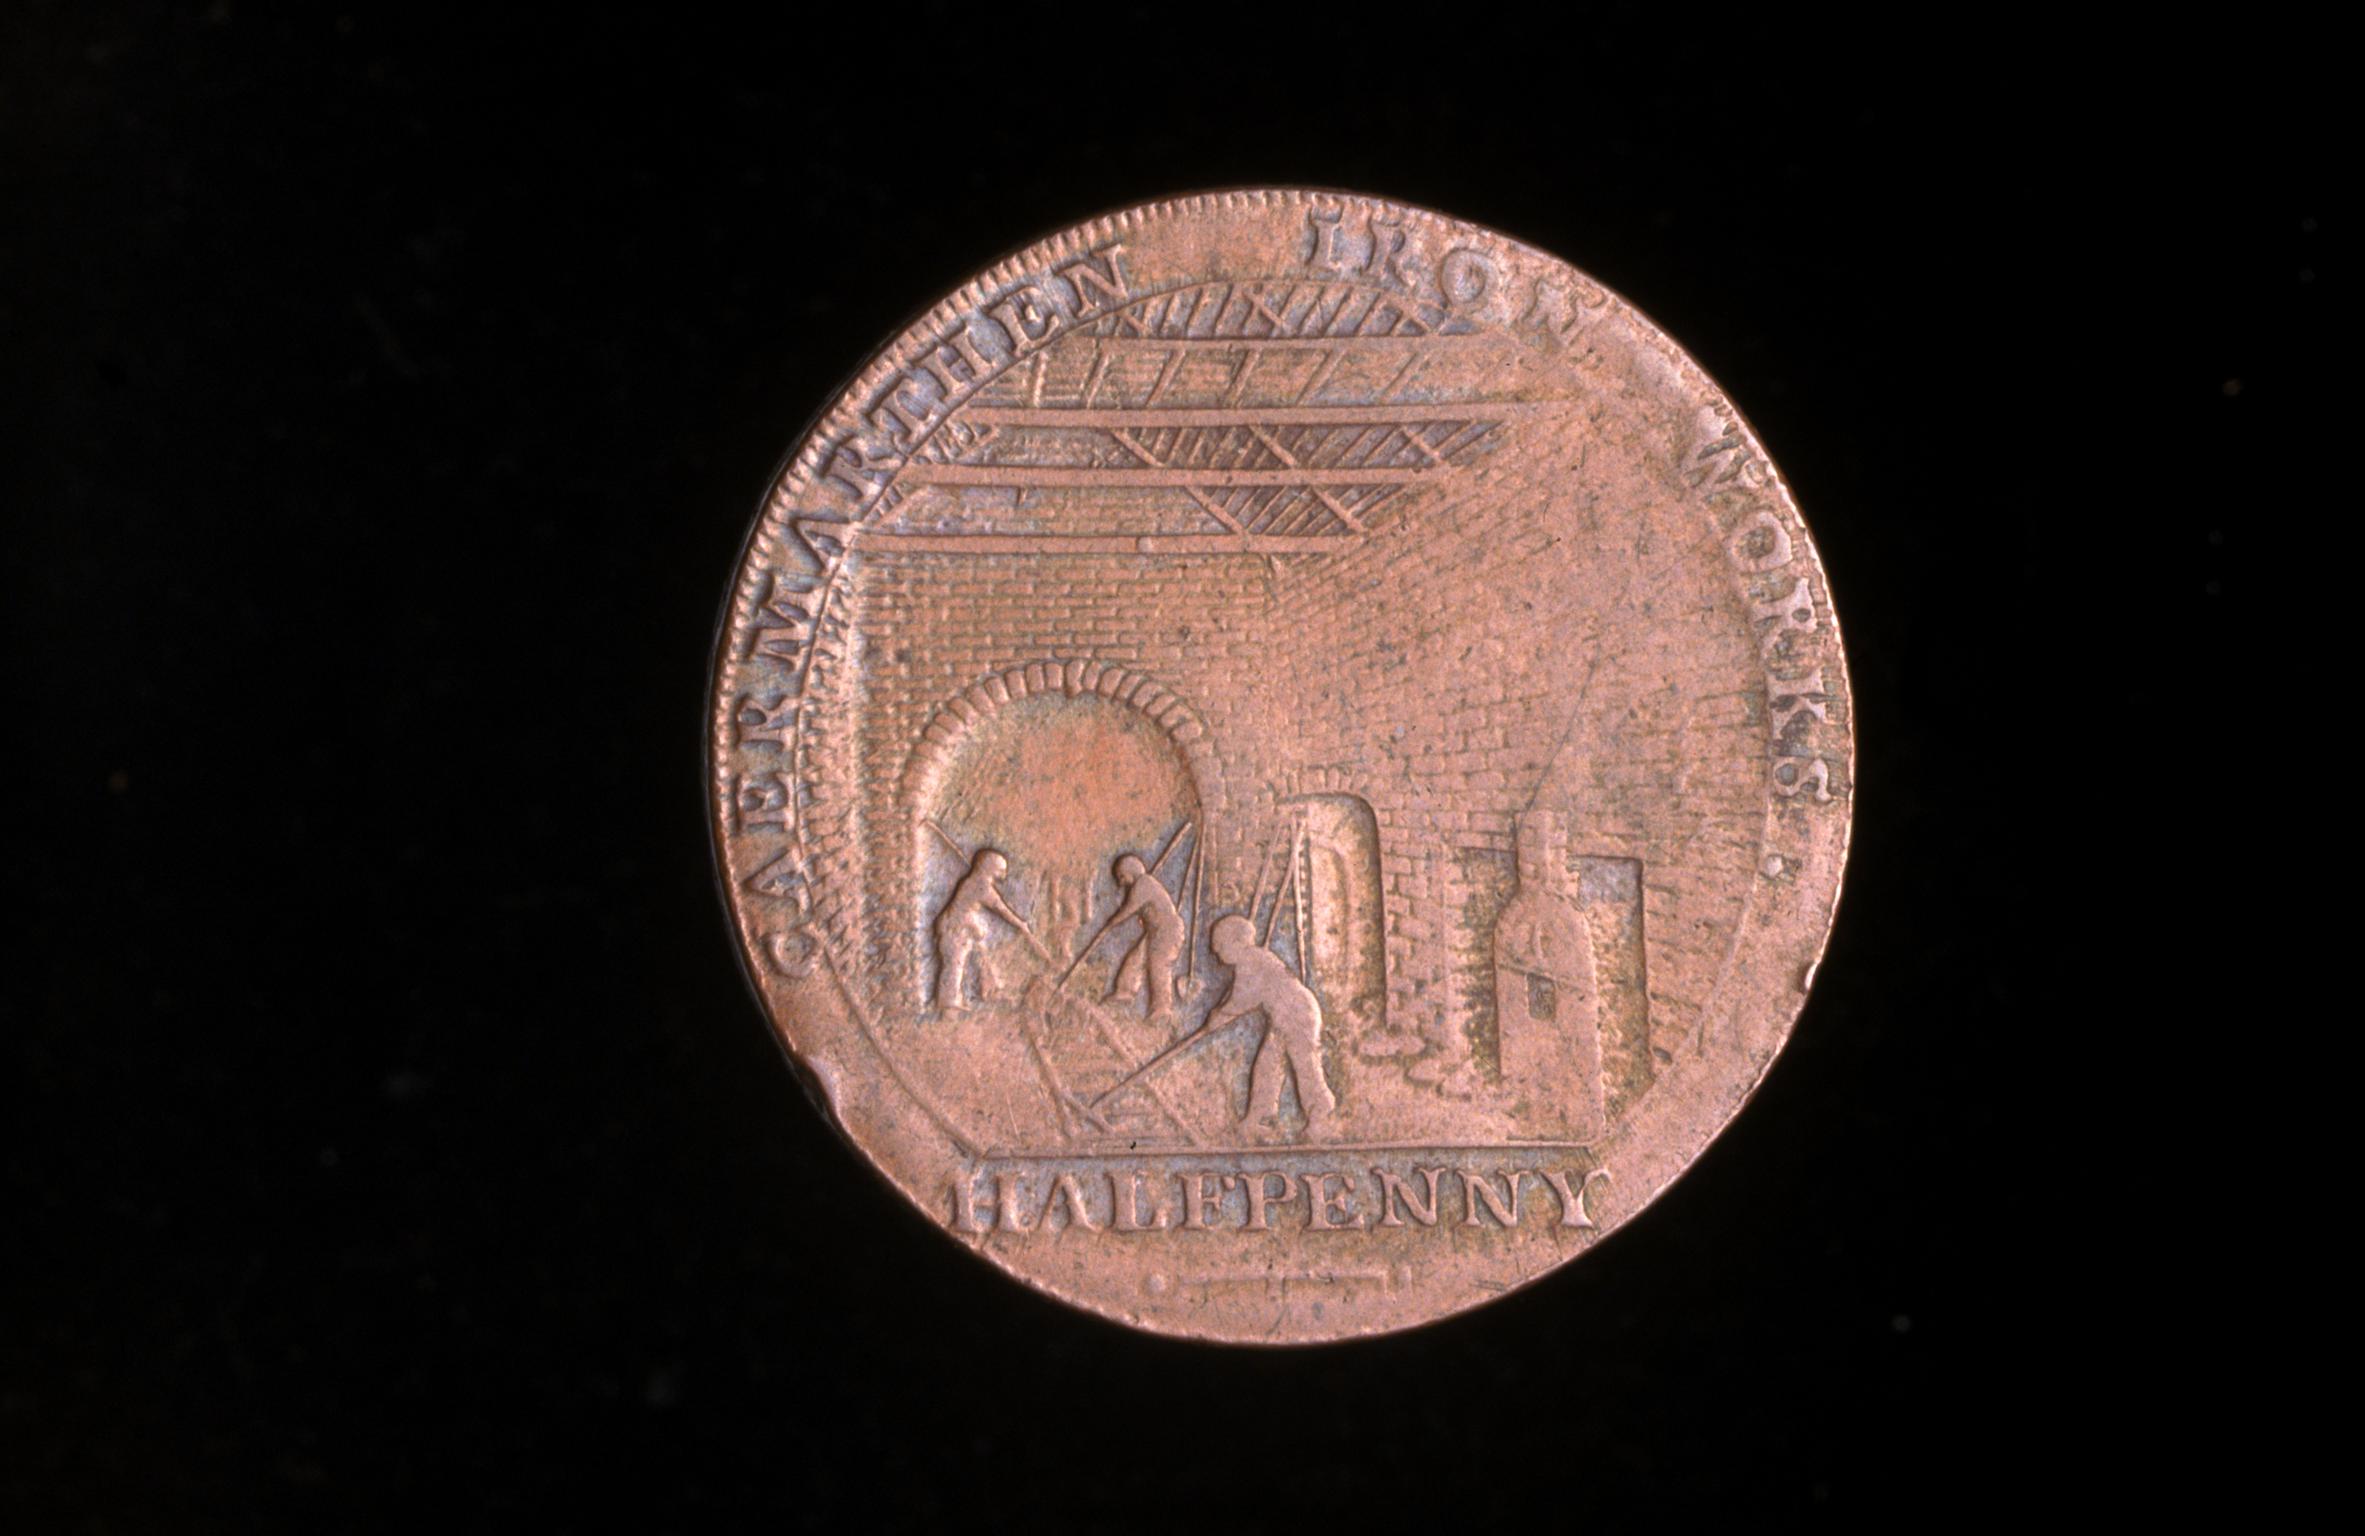 18th century token: Carmarthen ironworks